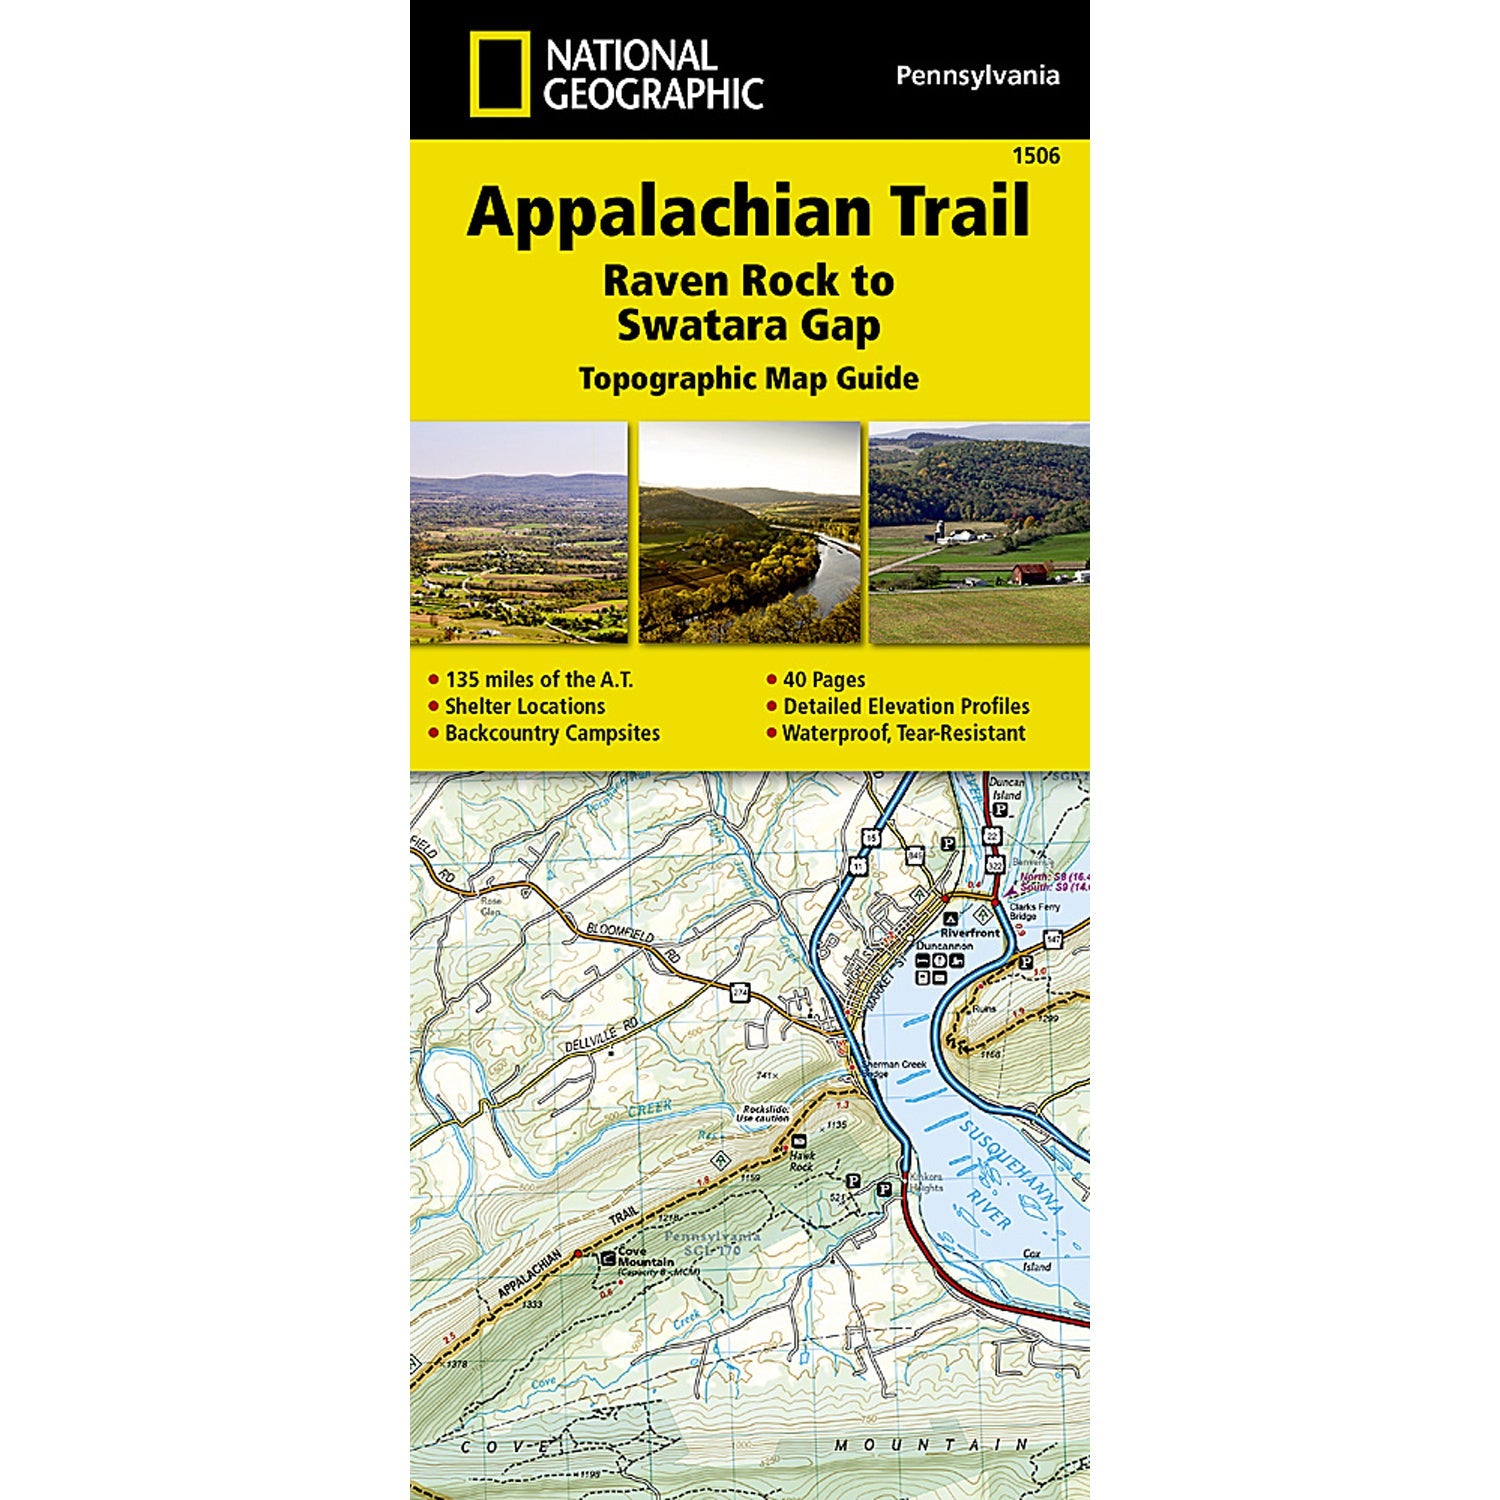 Appalachian Trail Map, Raven Rock to Swatara Gap [Pennsylvania]